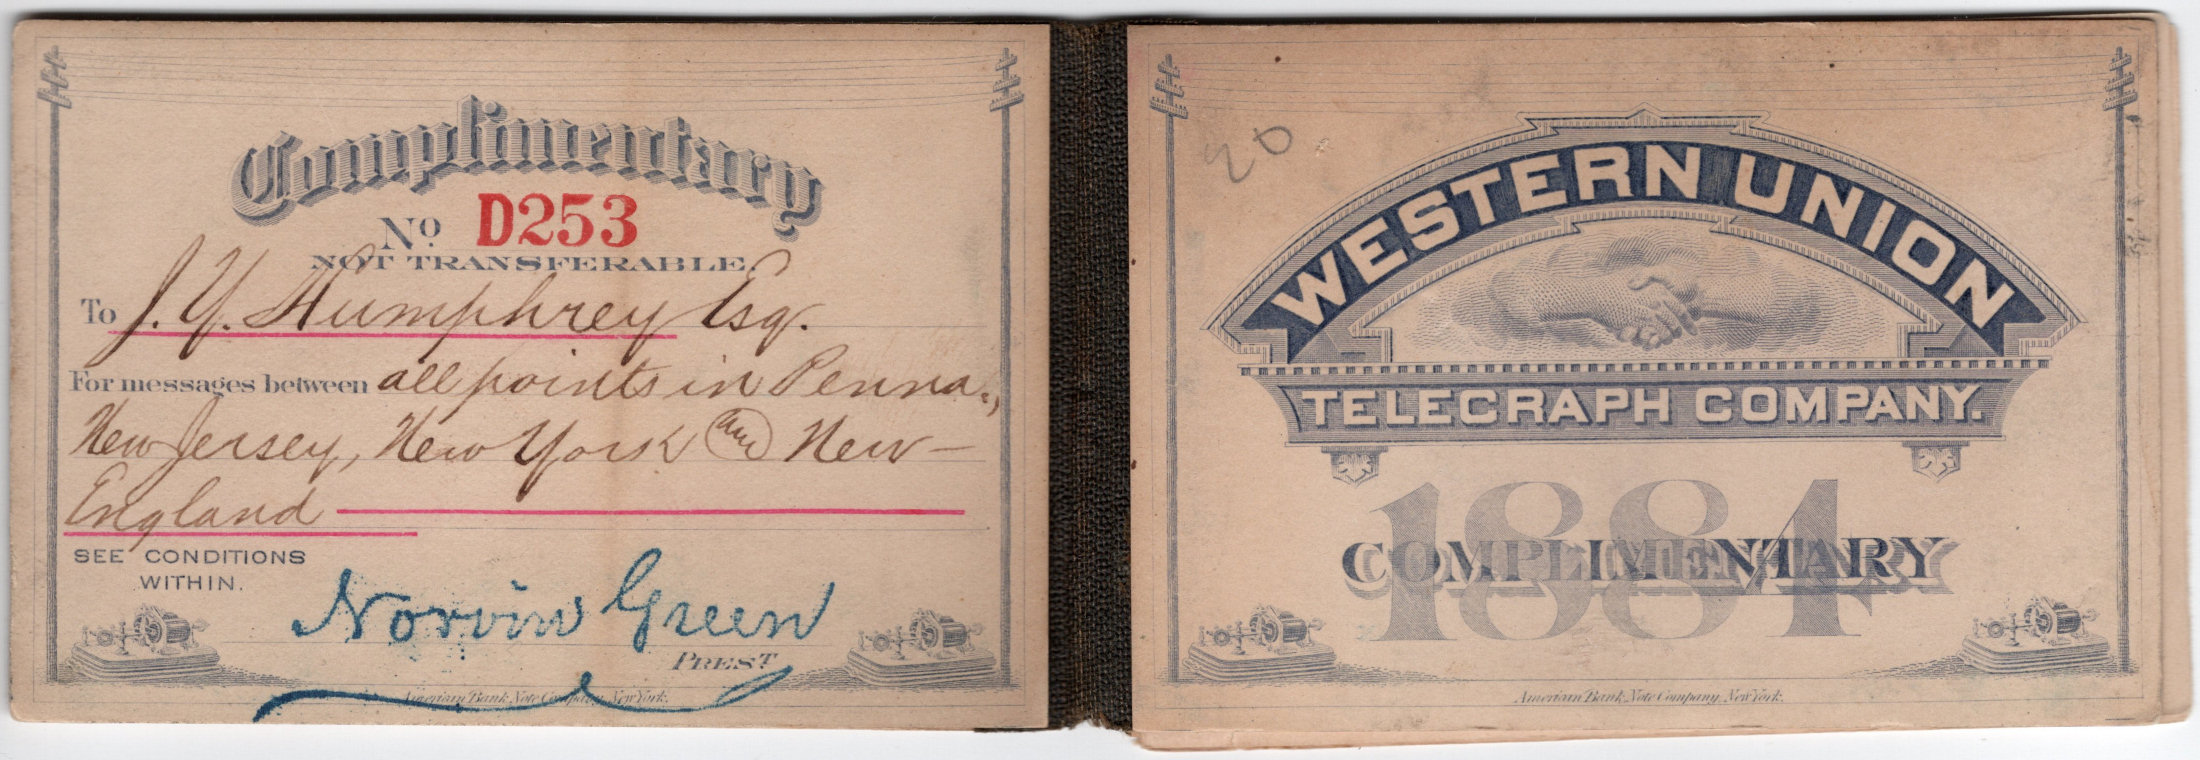 WU booklet 1884 - D253- outside